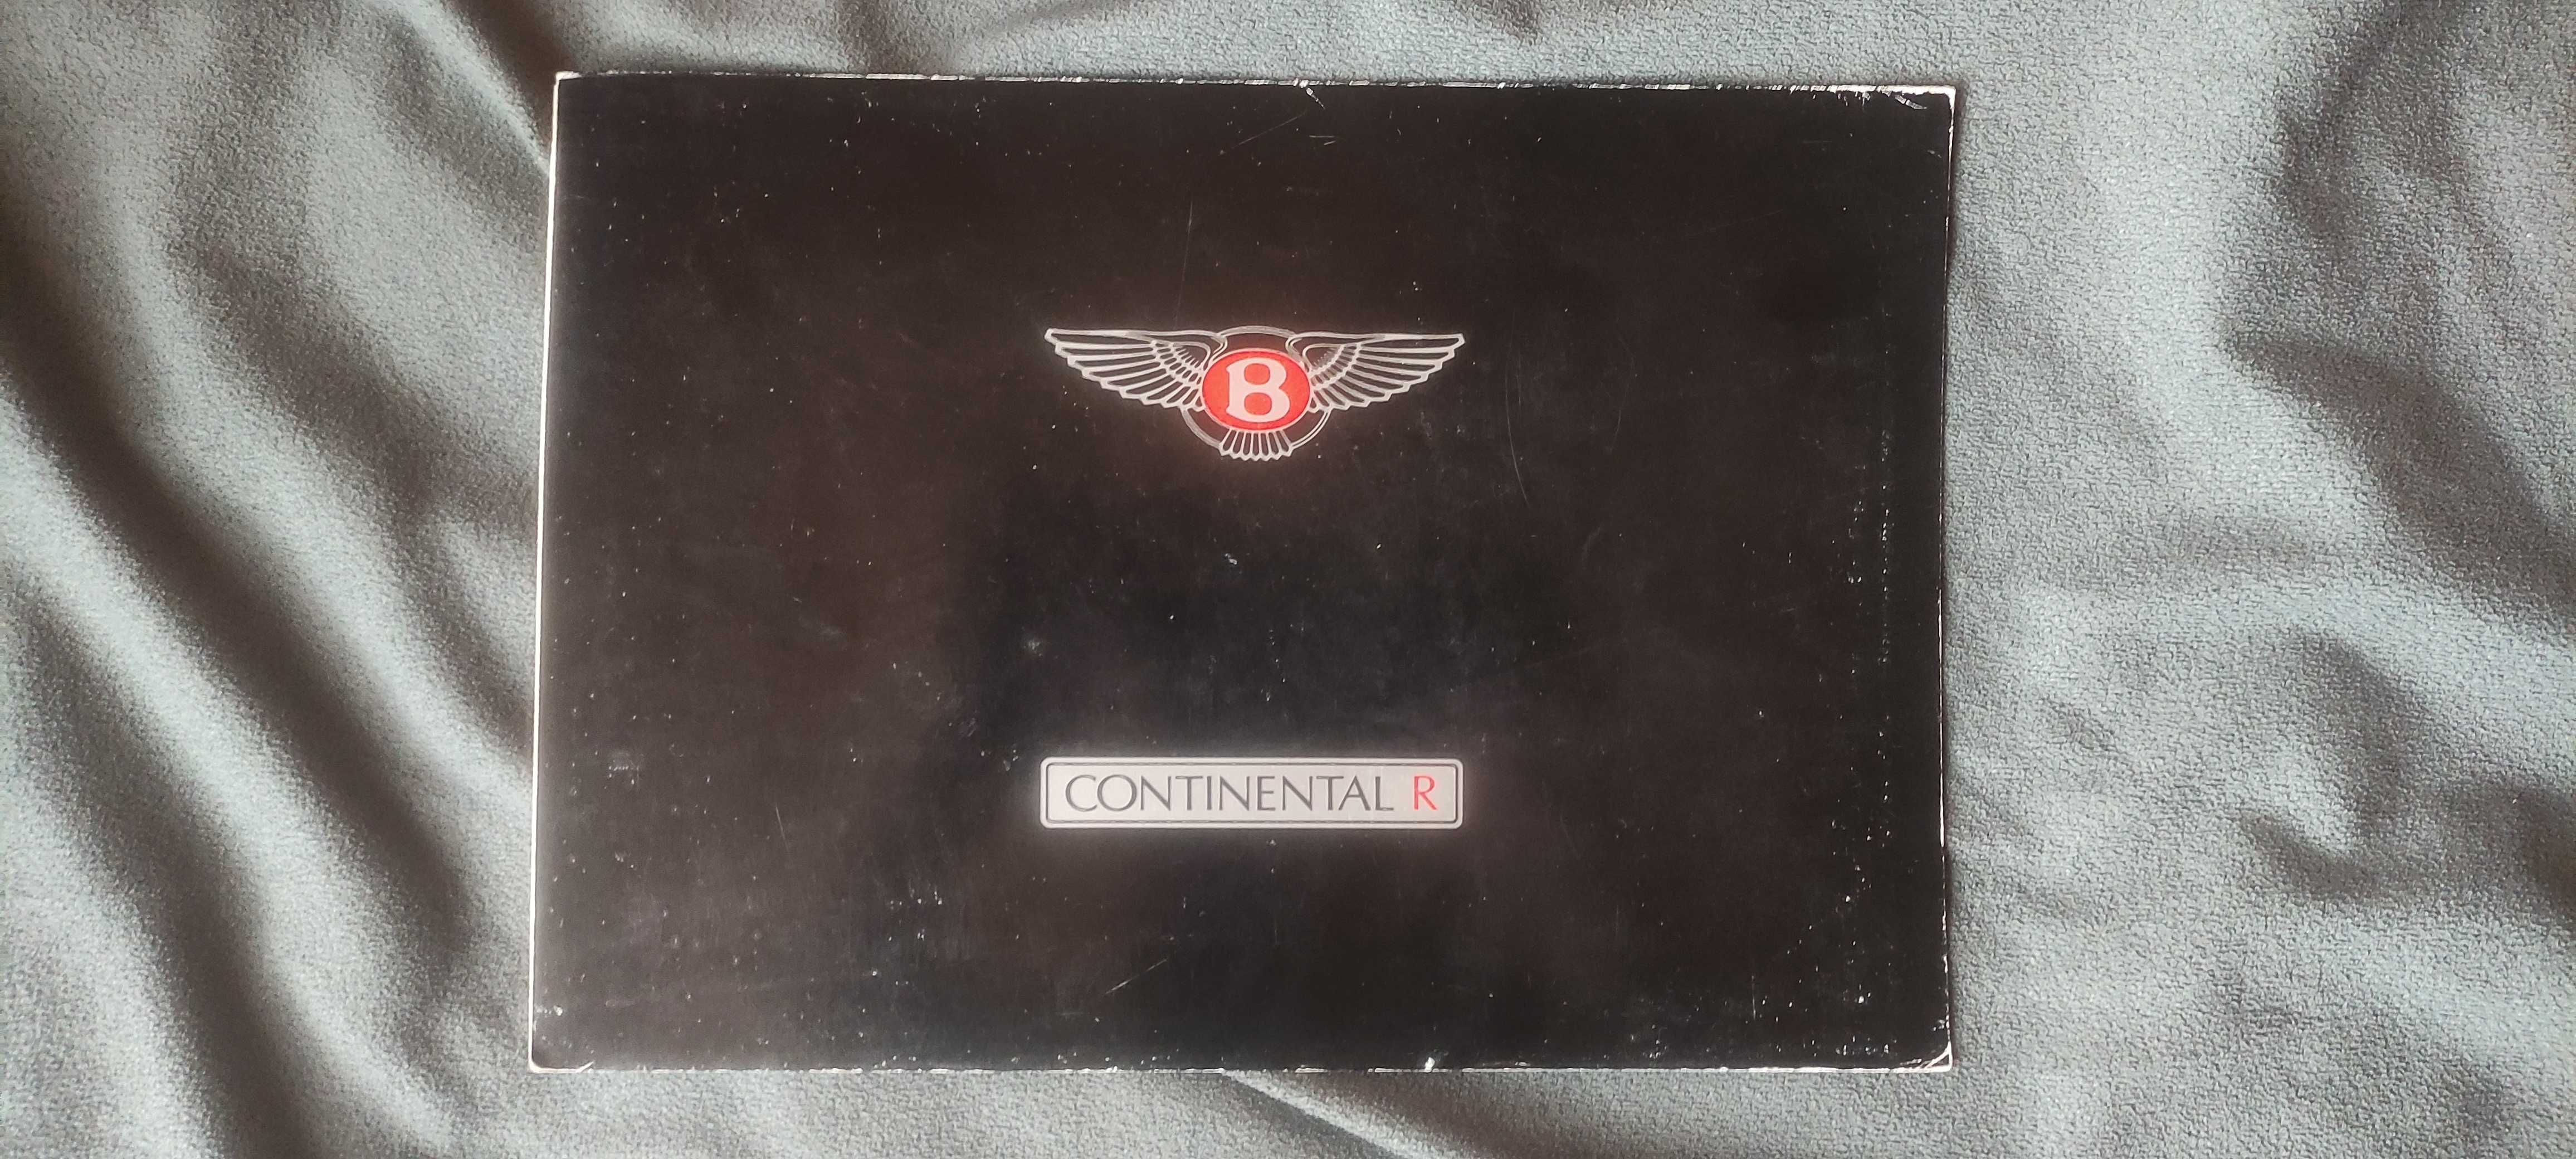 Prospekt Bentley Continental R